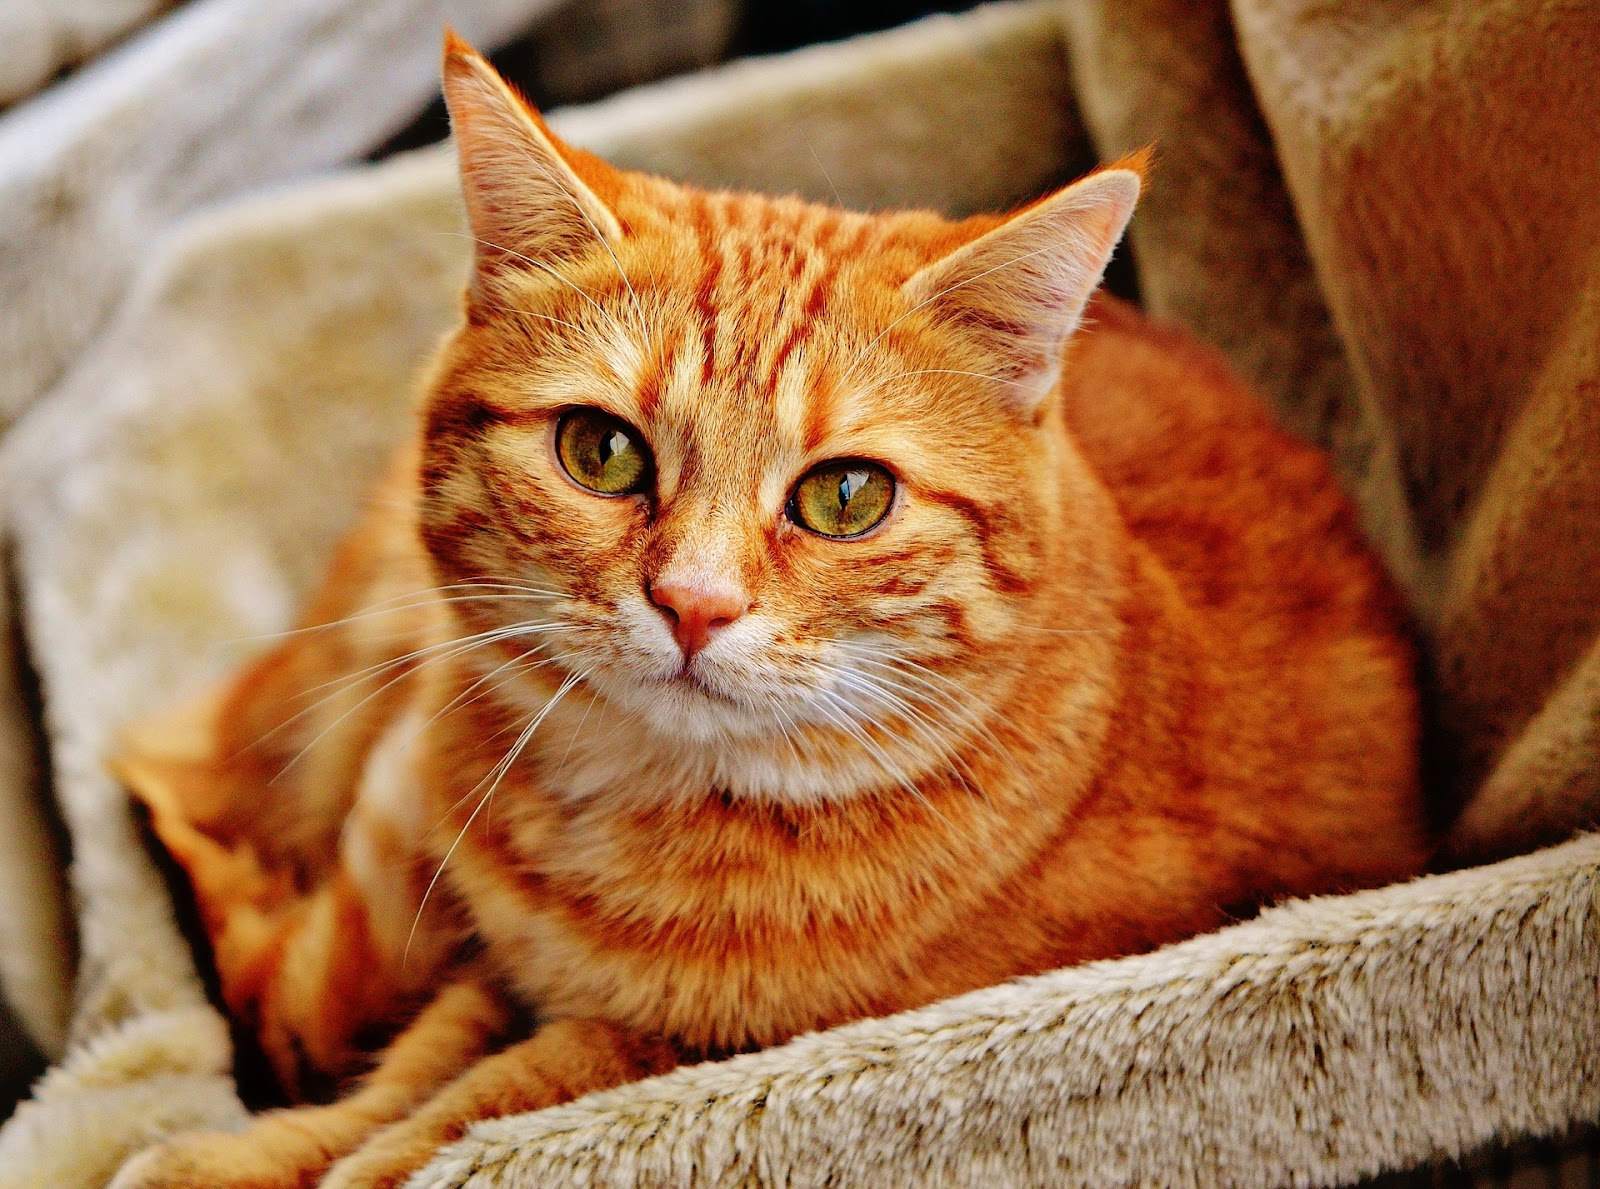 orange cat on fuzzy blanket, mature adult cat